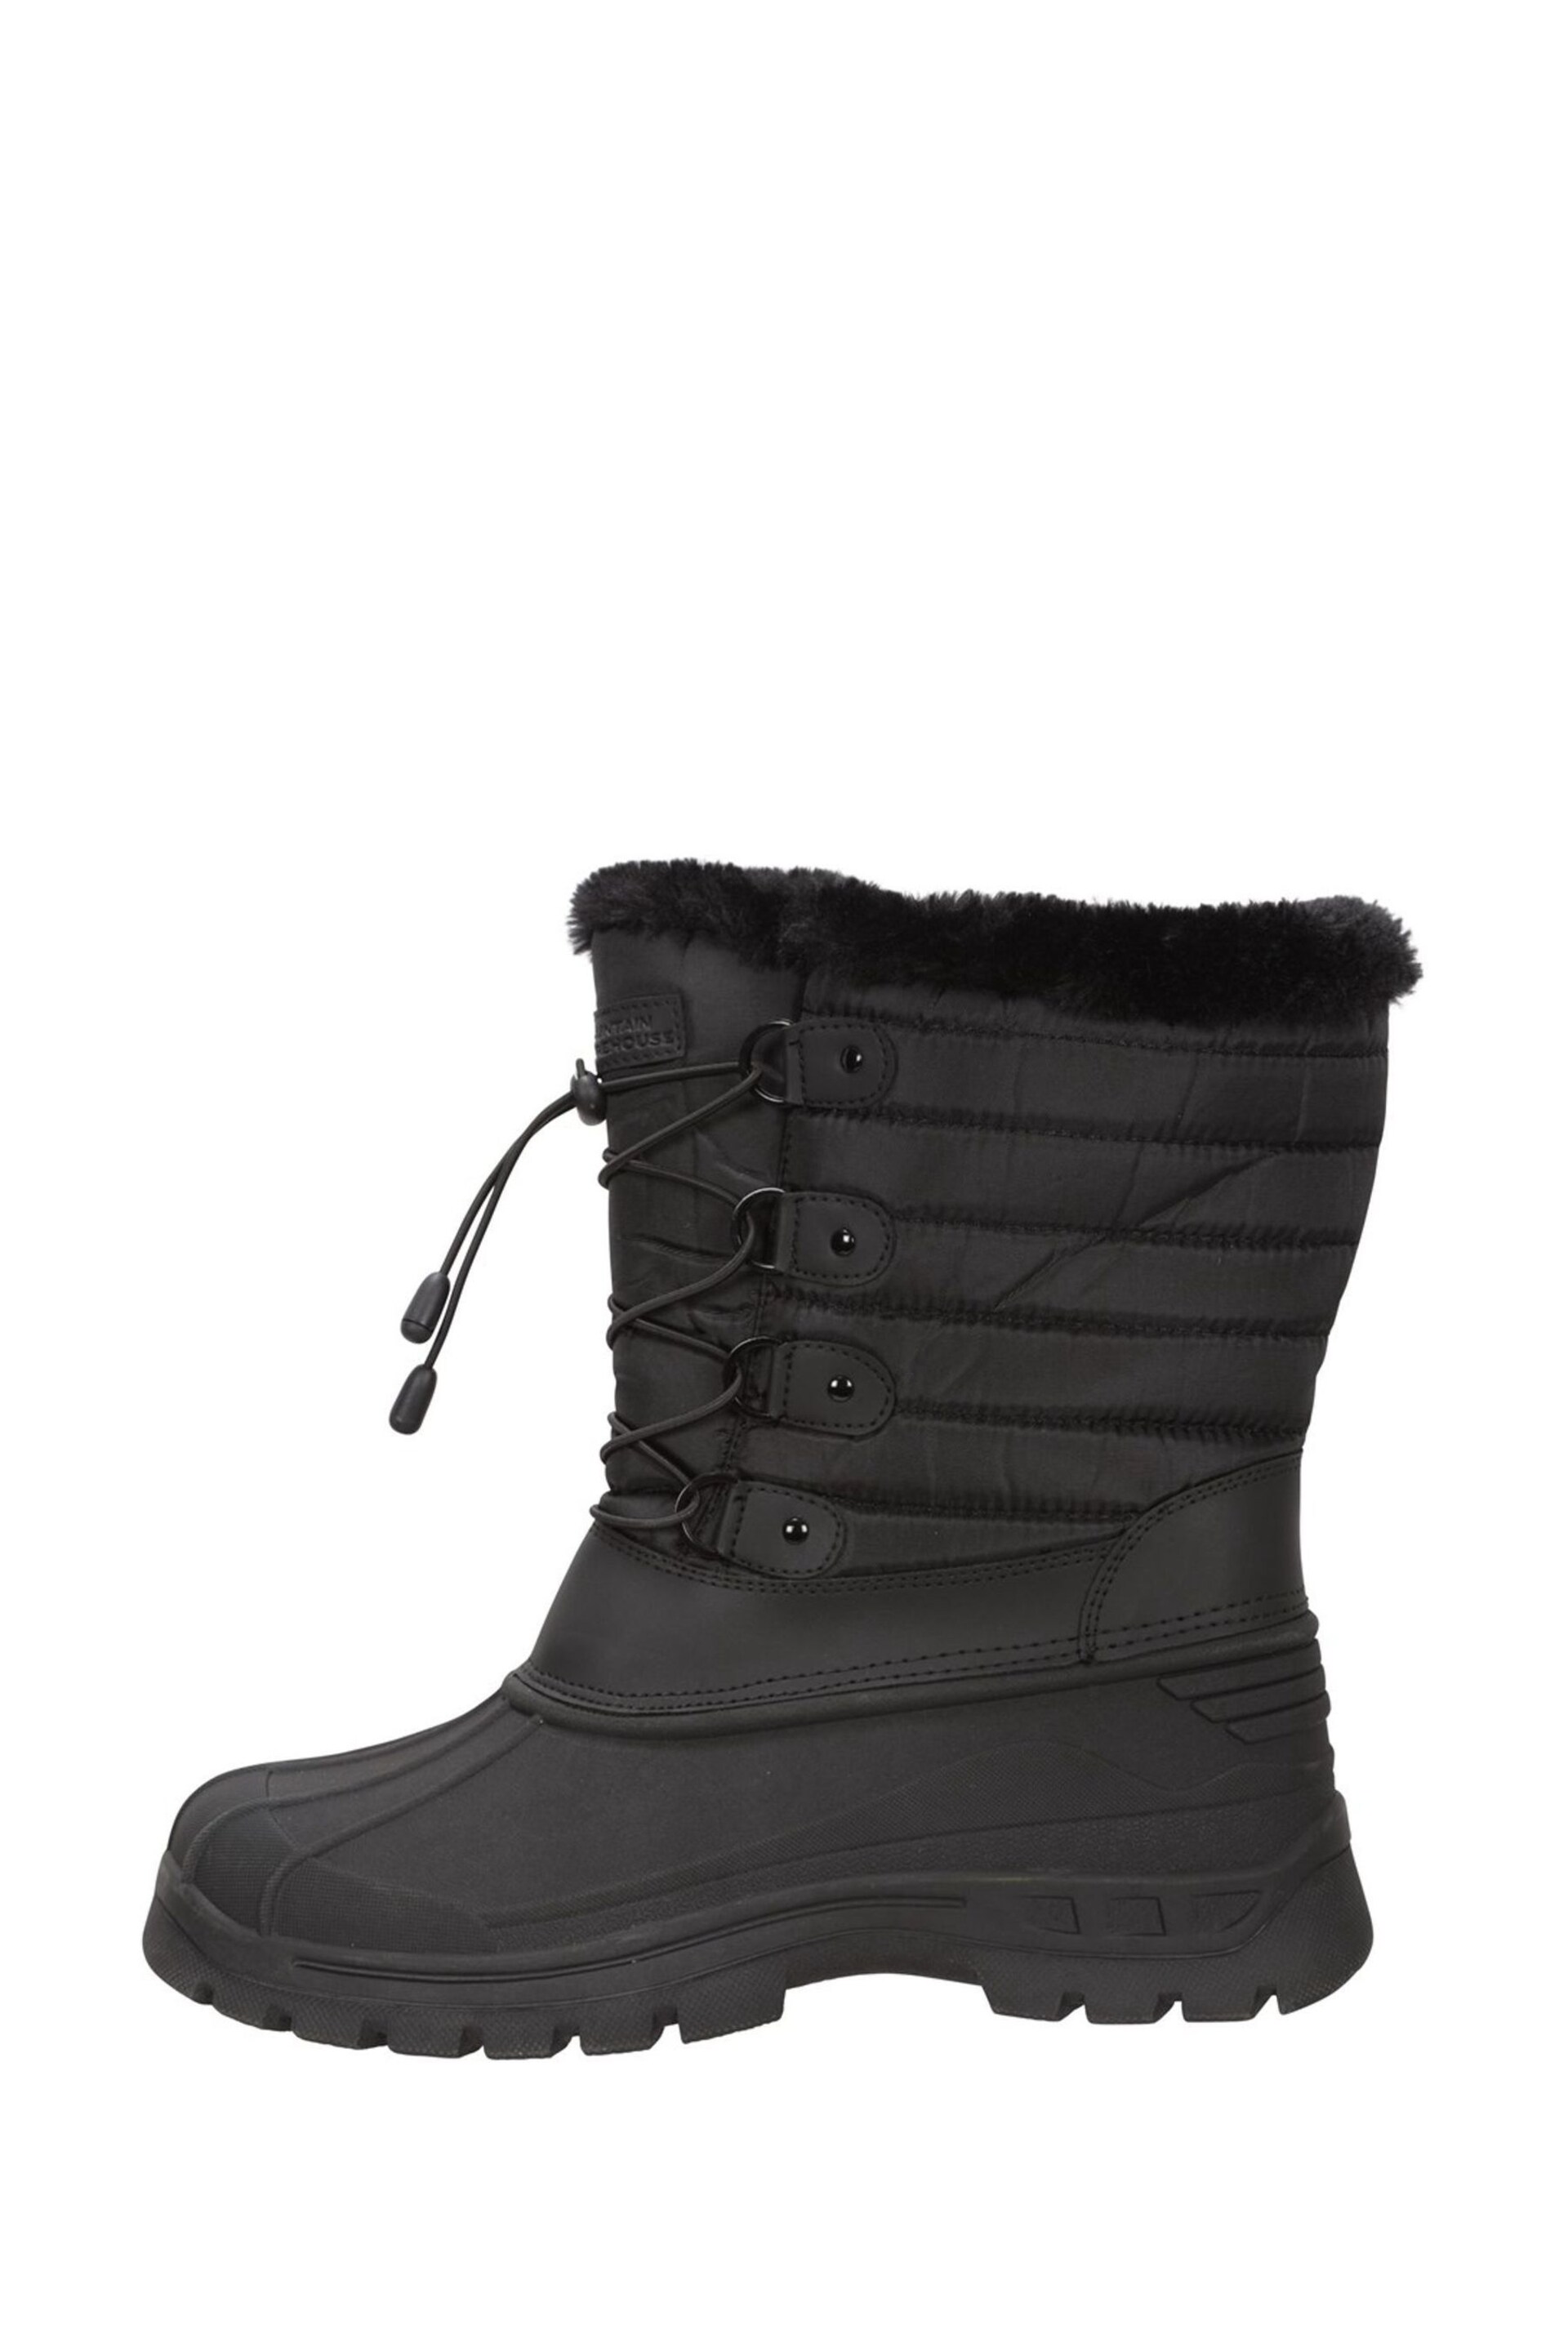 Mountain Warehouse Black Whistler Womens Snow Walking Boots - Image 2 of 5